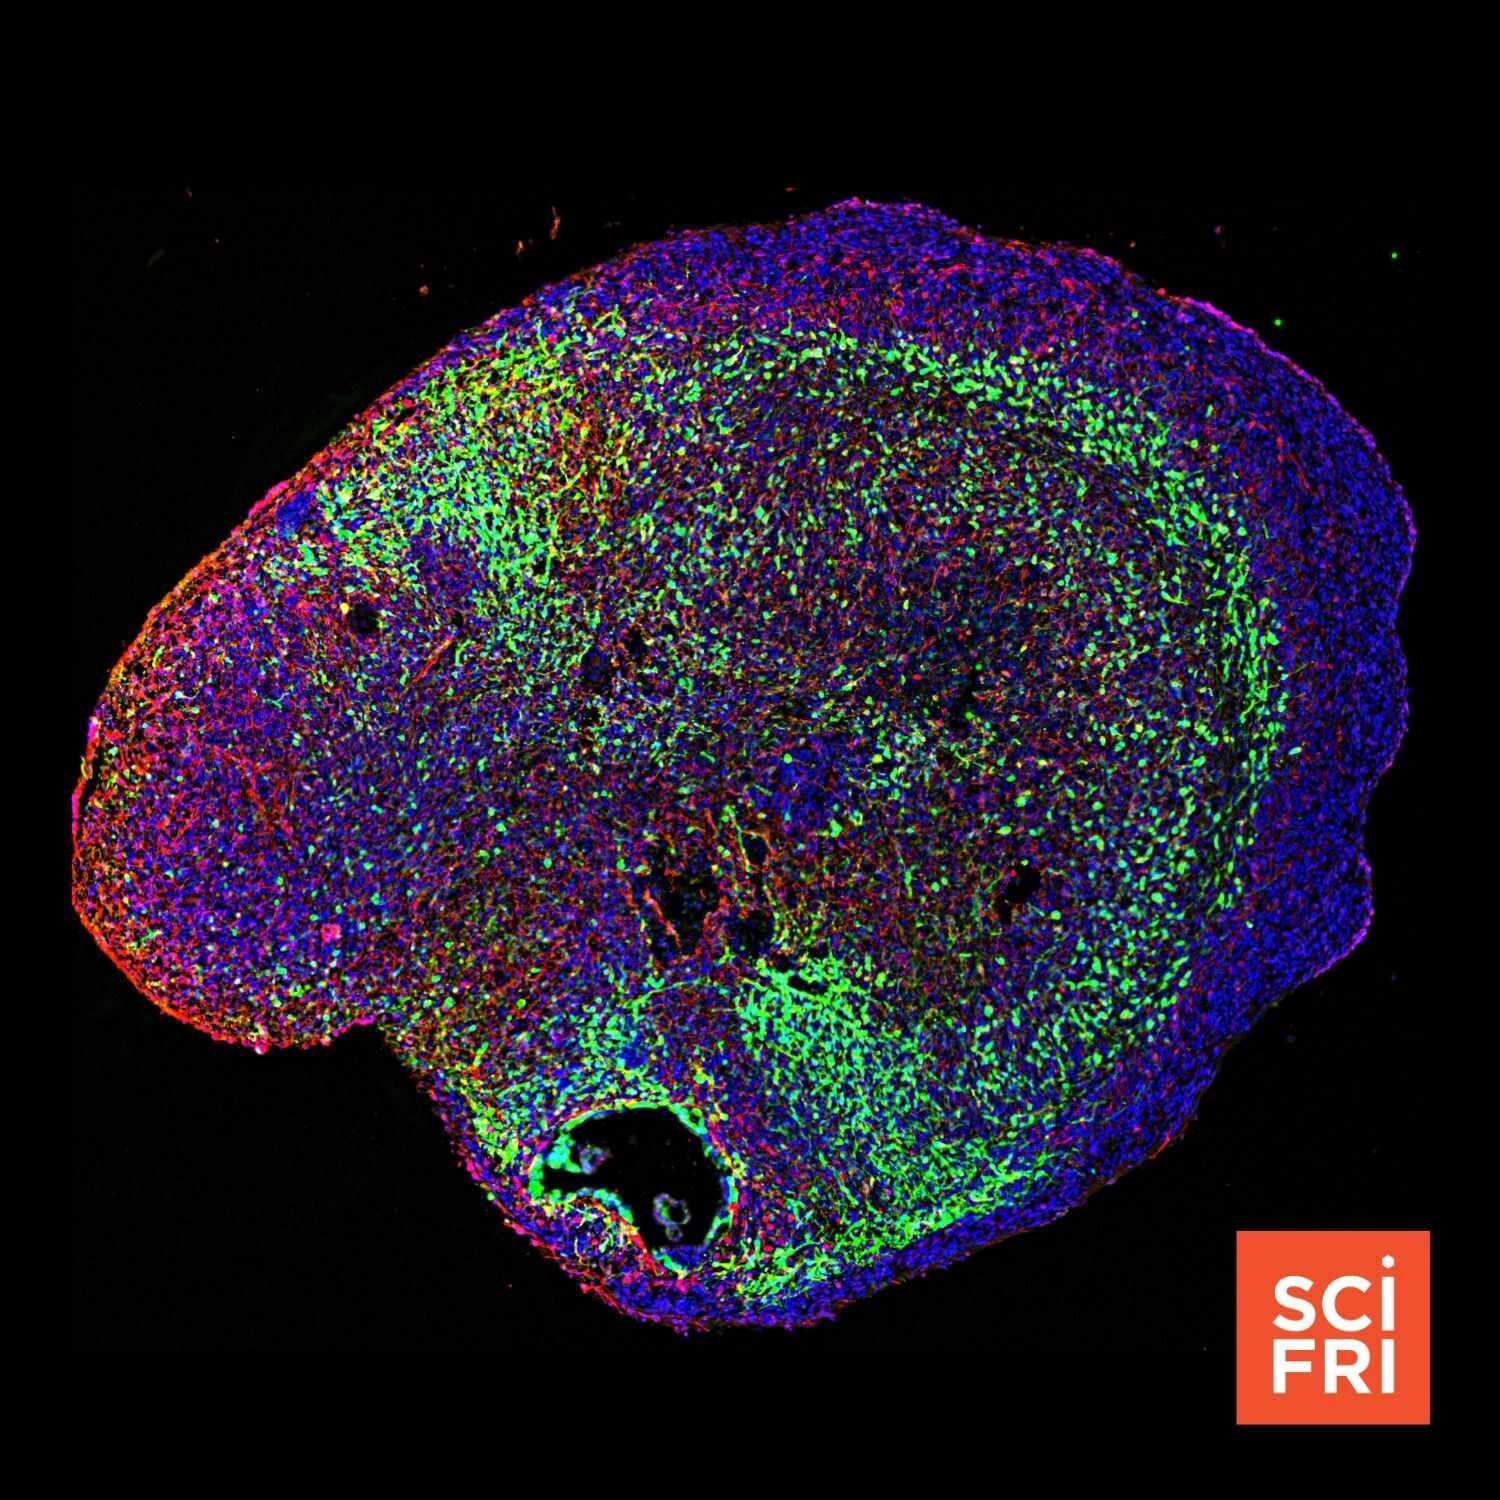 685: Brain ‘Organoids’: Lab-Grown Cell Clusters Model Brain Functions